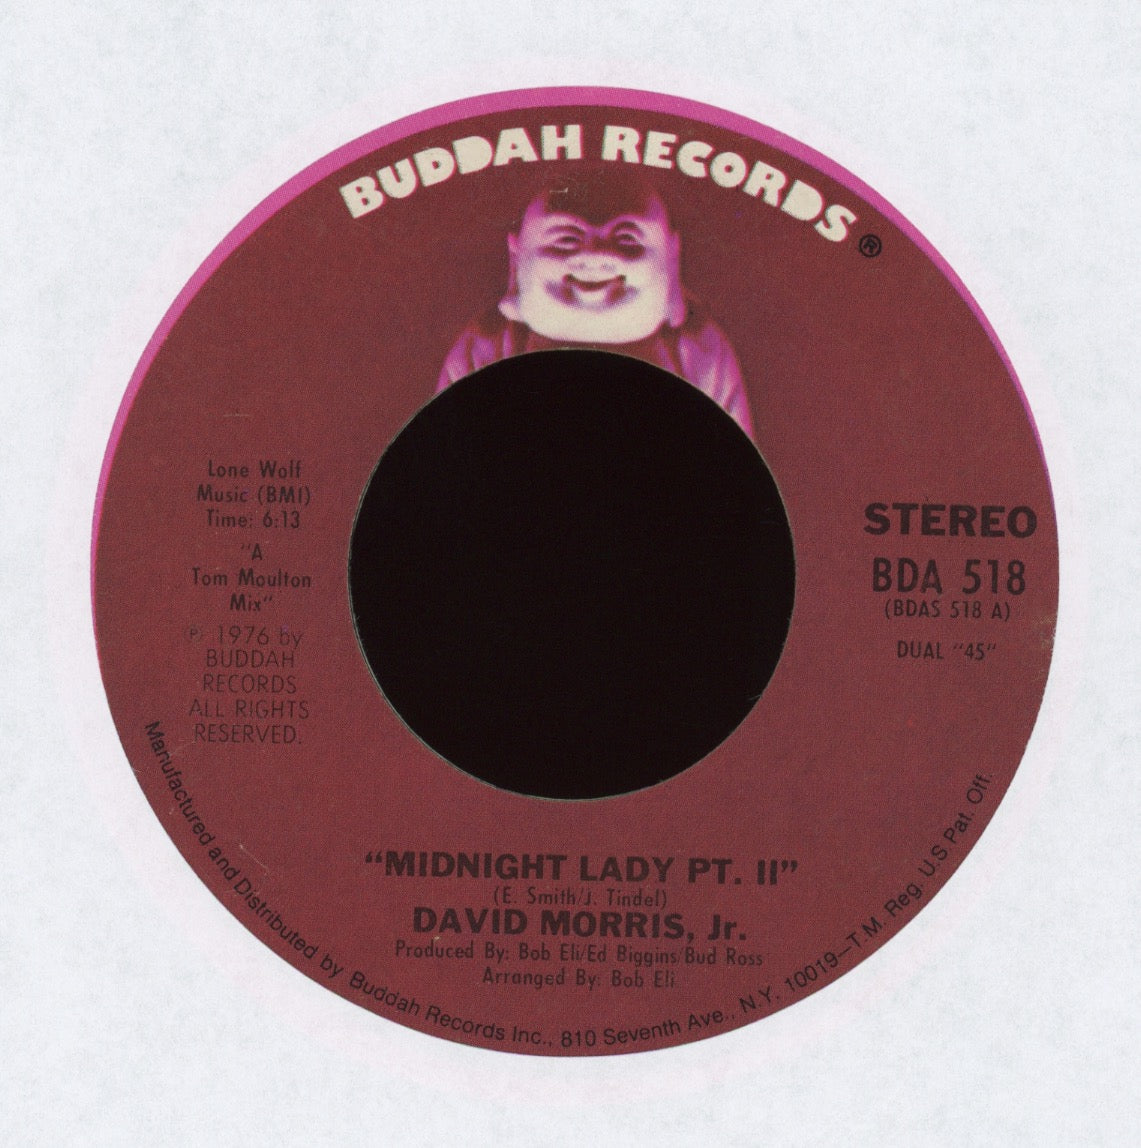 David Morris - Midnight Lady Pt. II on Buddah